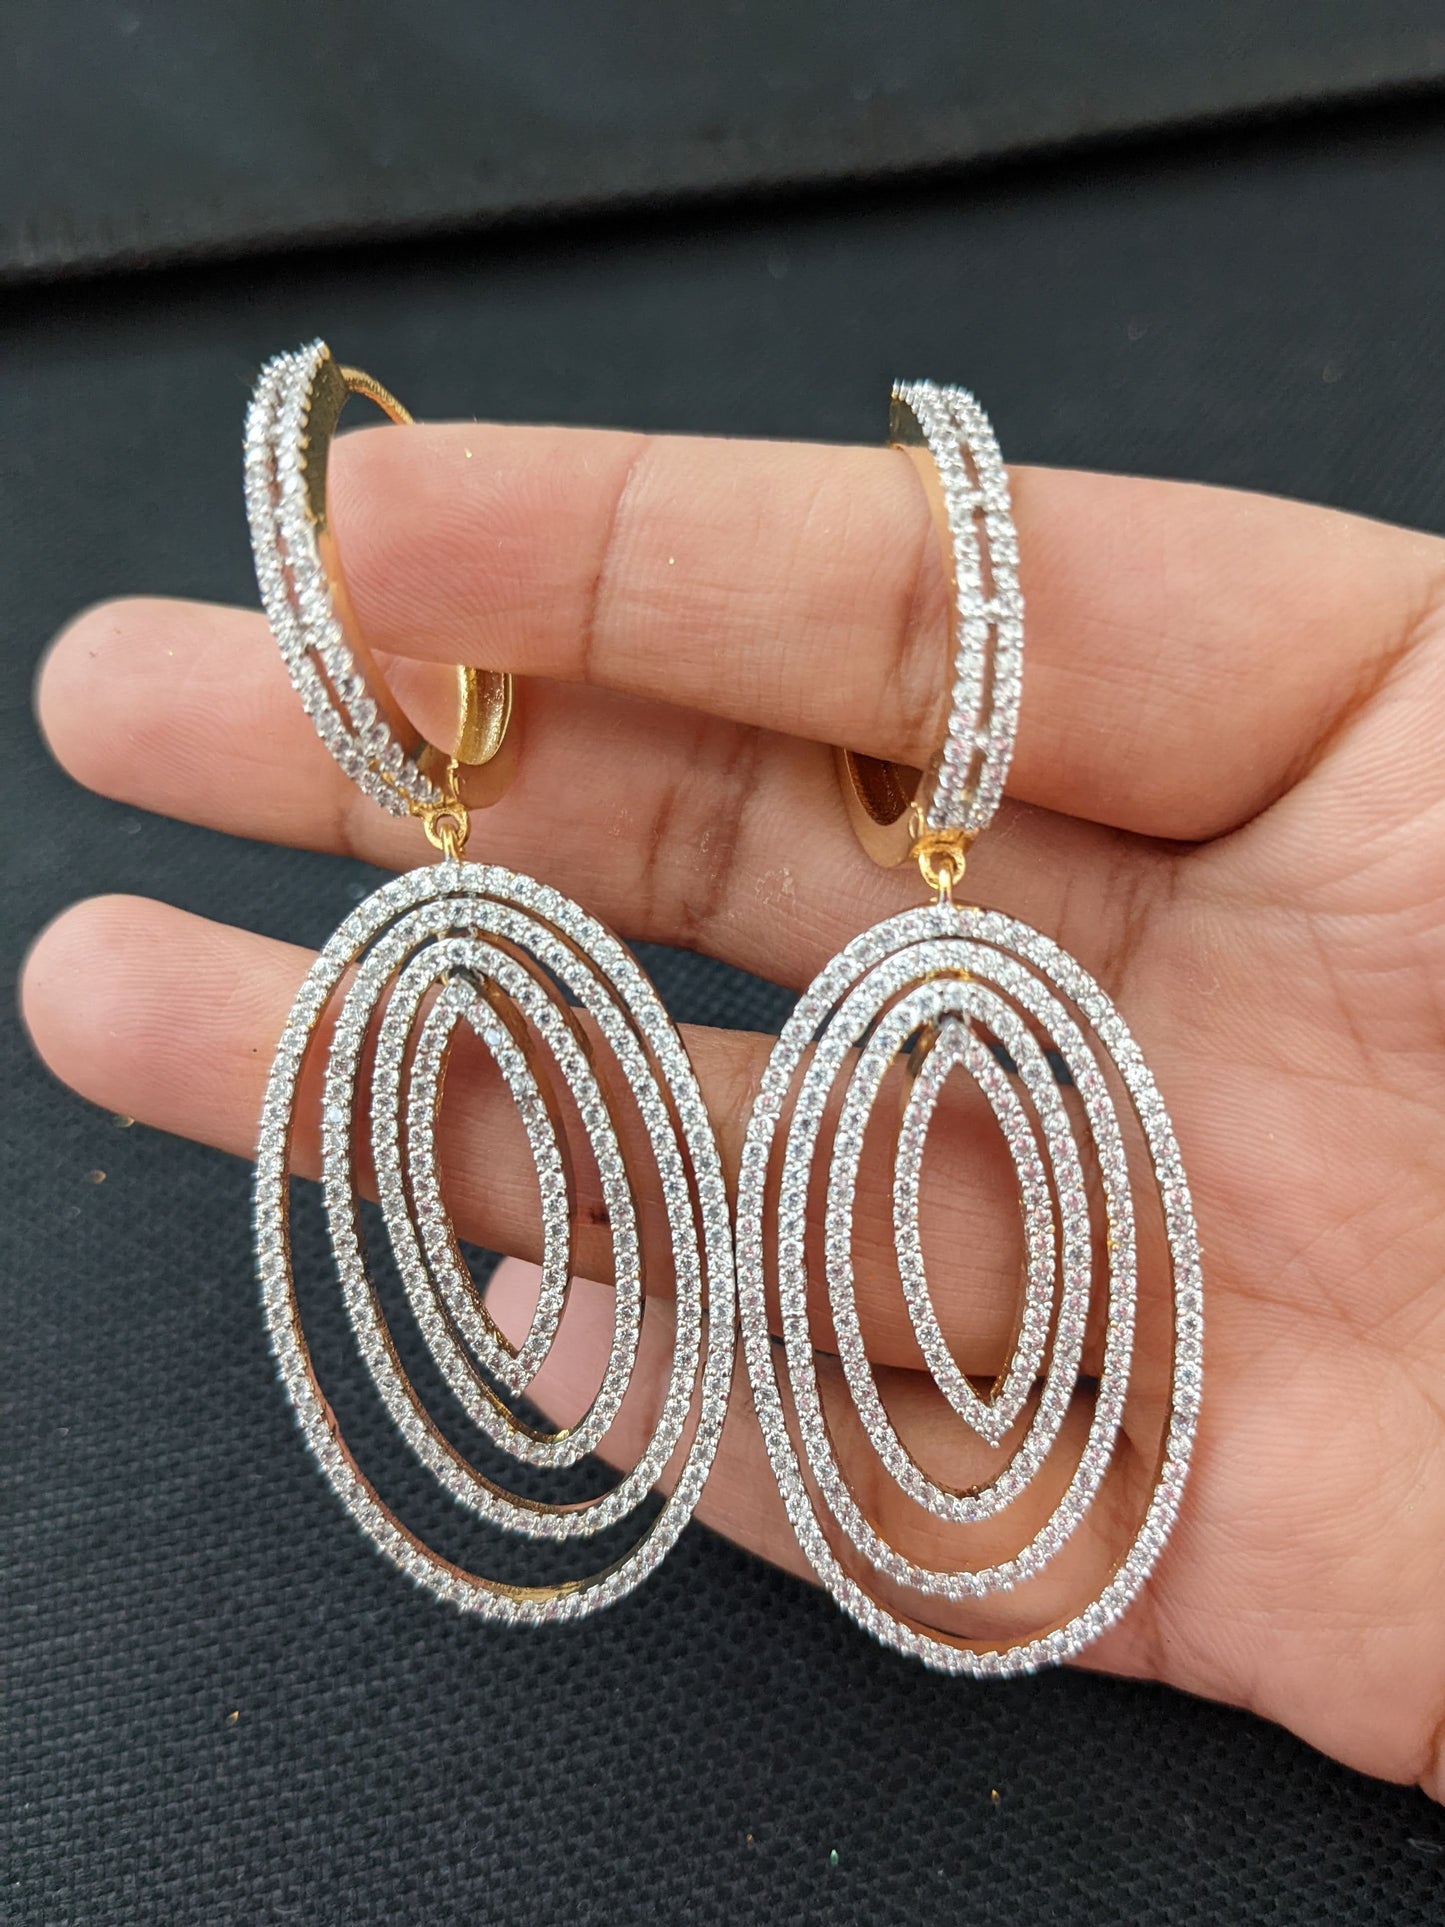 Multiple oval linked Ring style long CZ Earrings